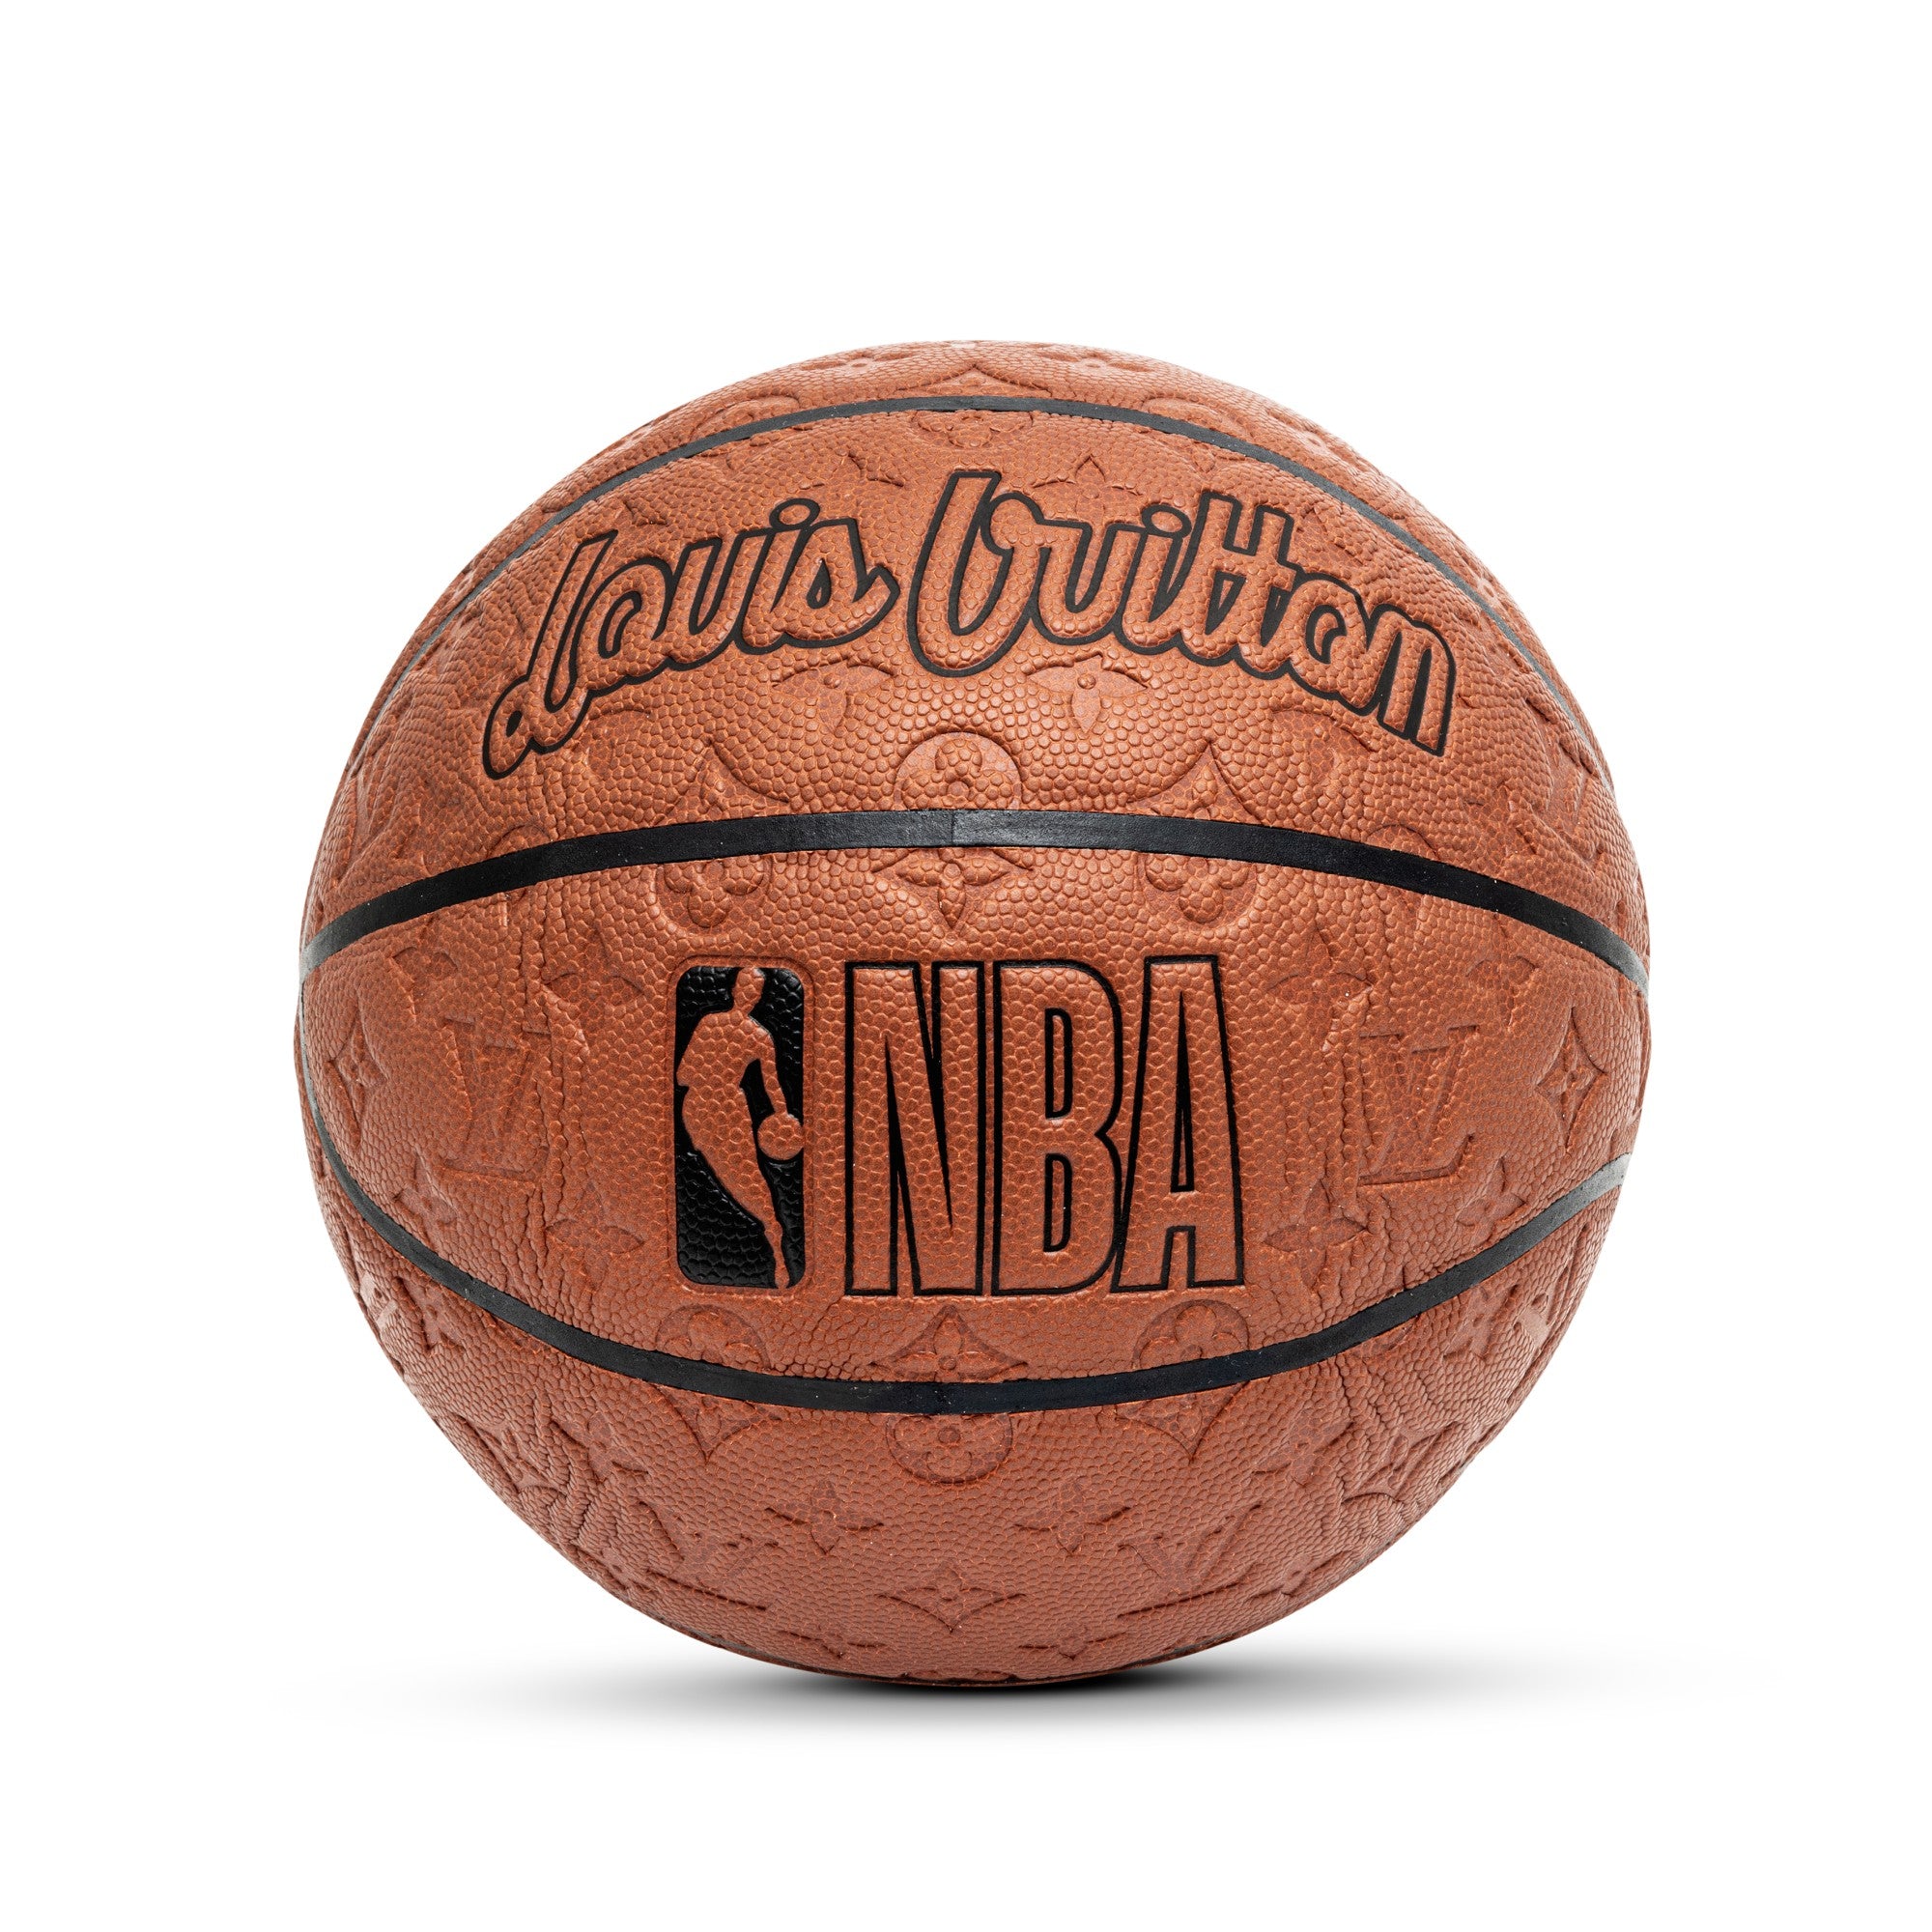 Louis Vuitton NBA Leather Basketball Jacket